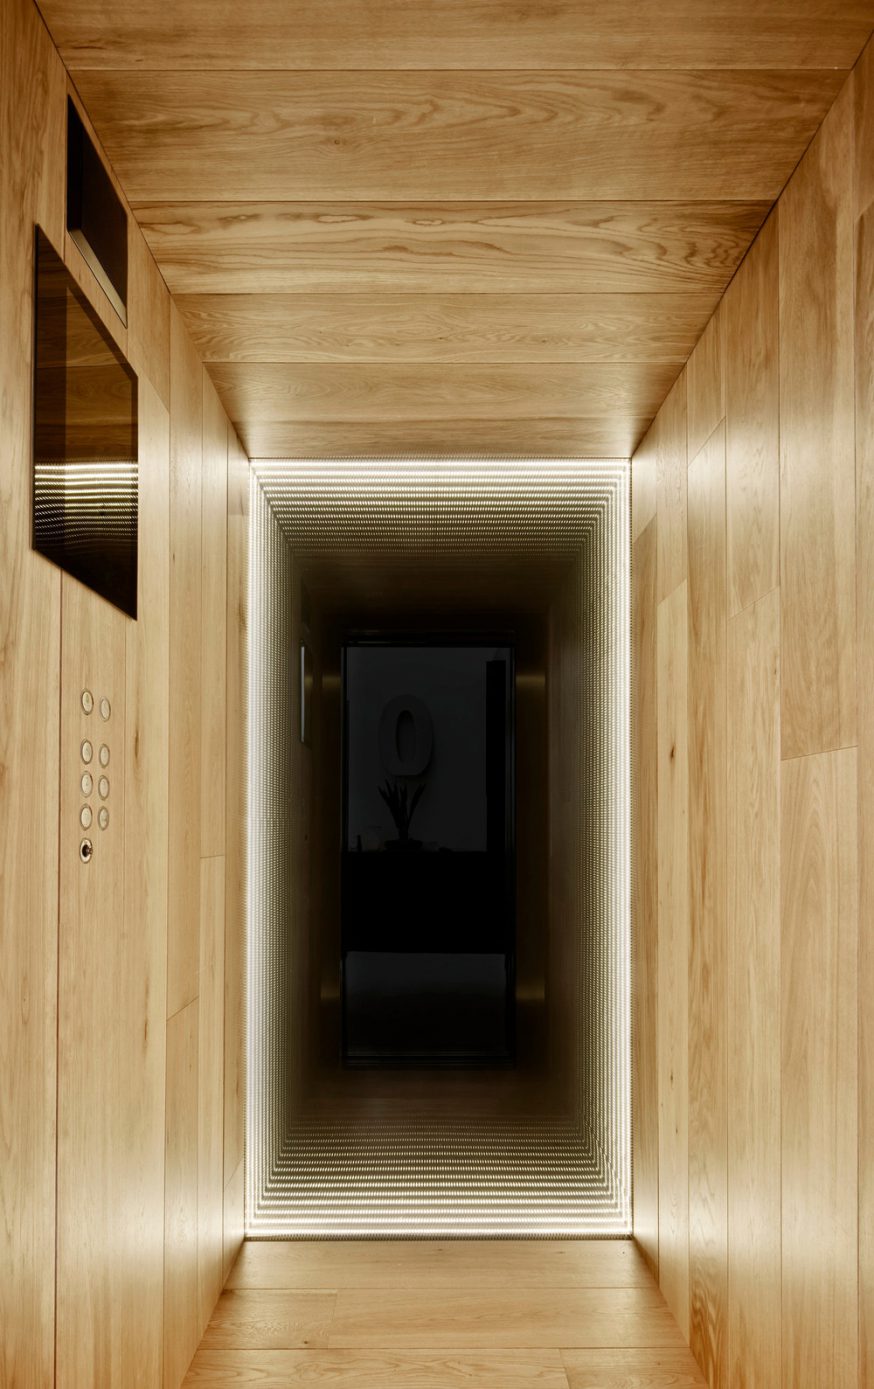 illuminated corridor in wood